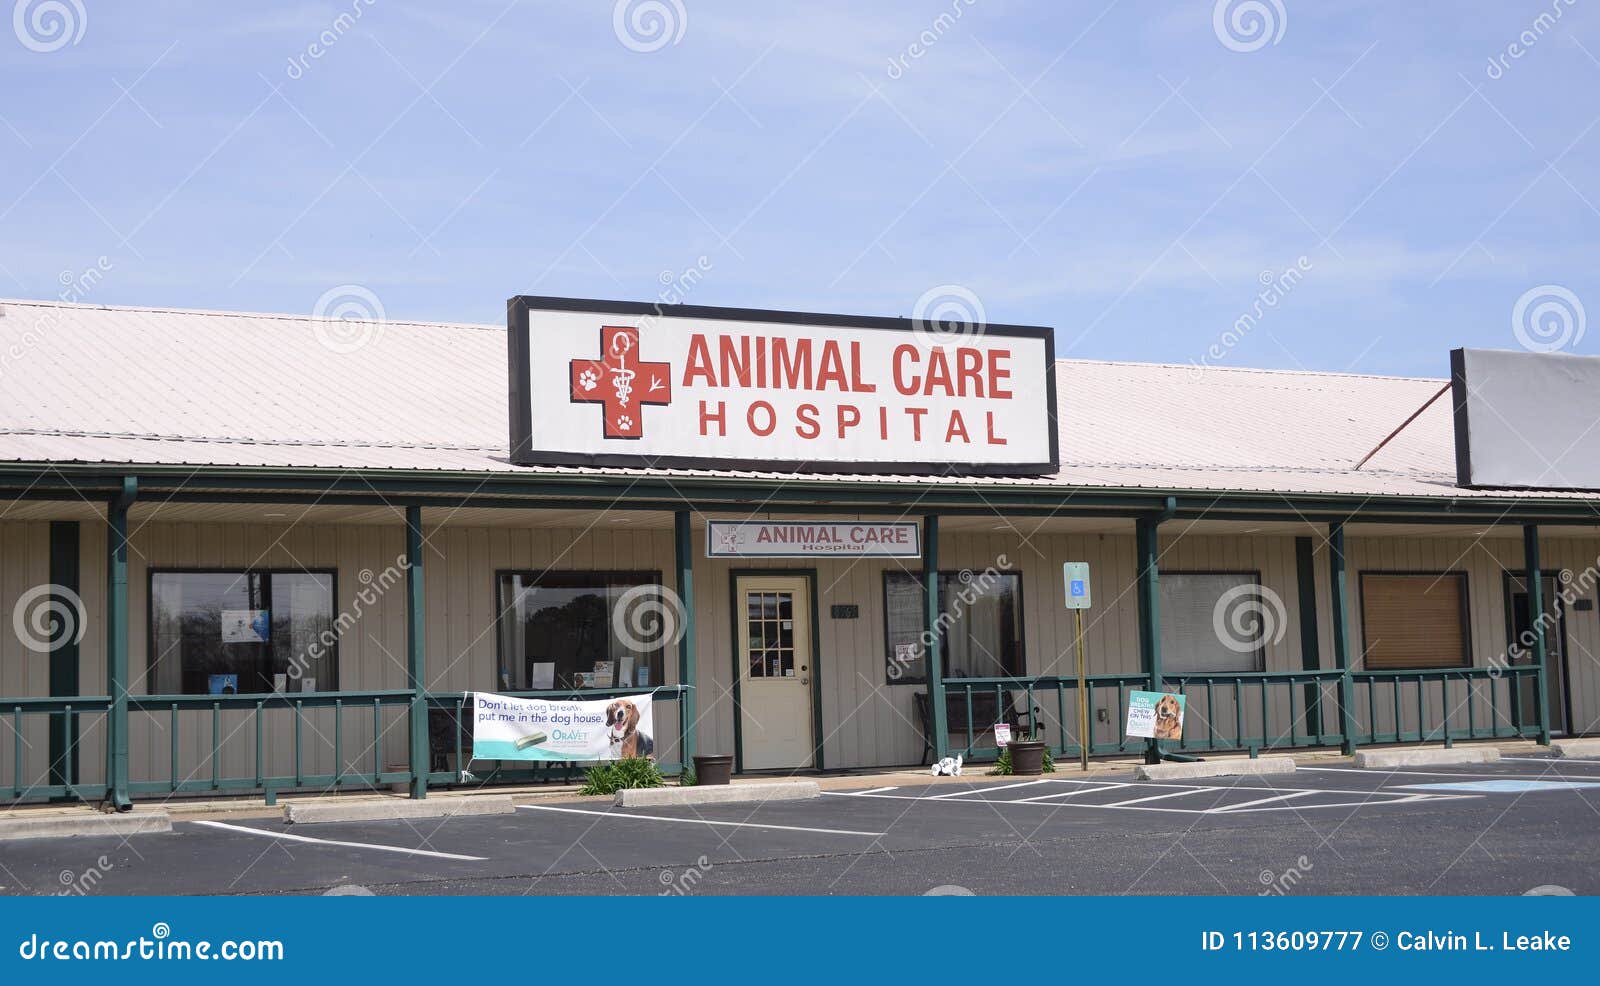 animal care hospital provides best veterinary hospital care your cat dog other pet animal care hospital oakland tn 113609777